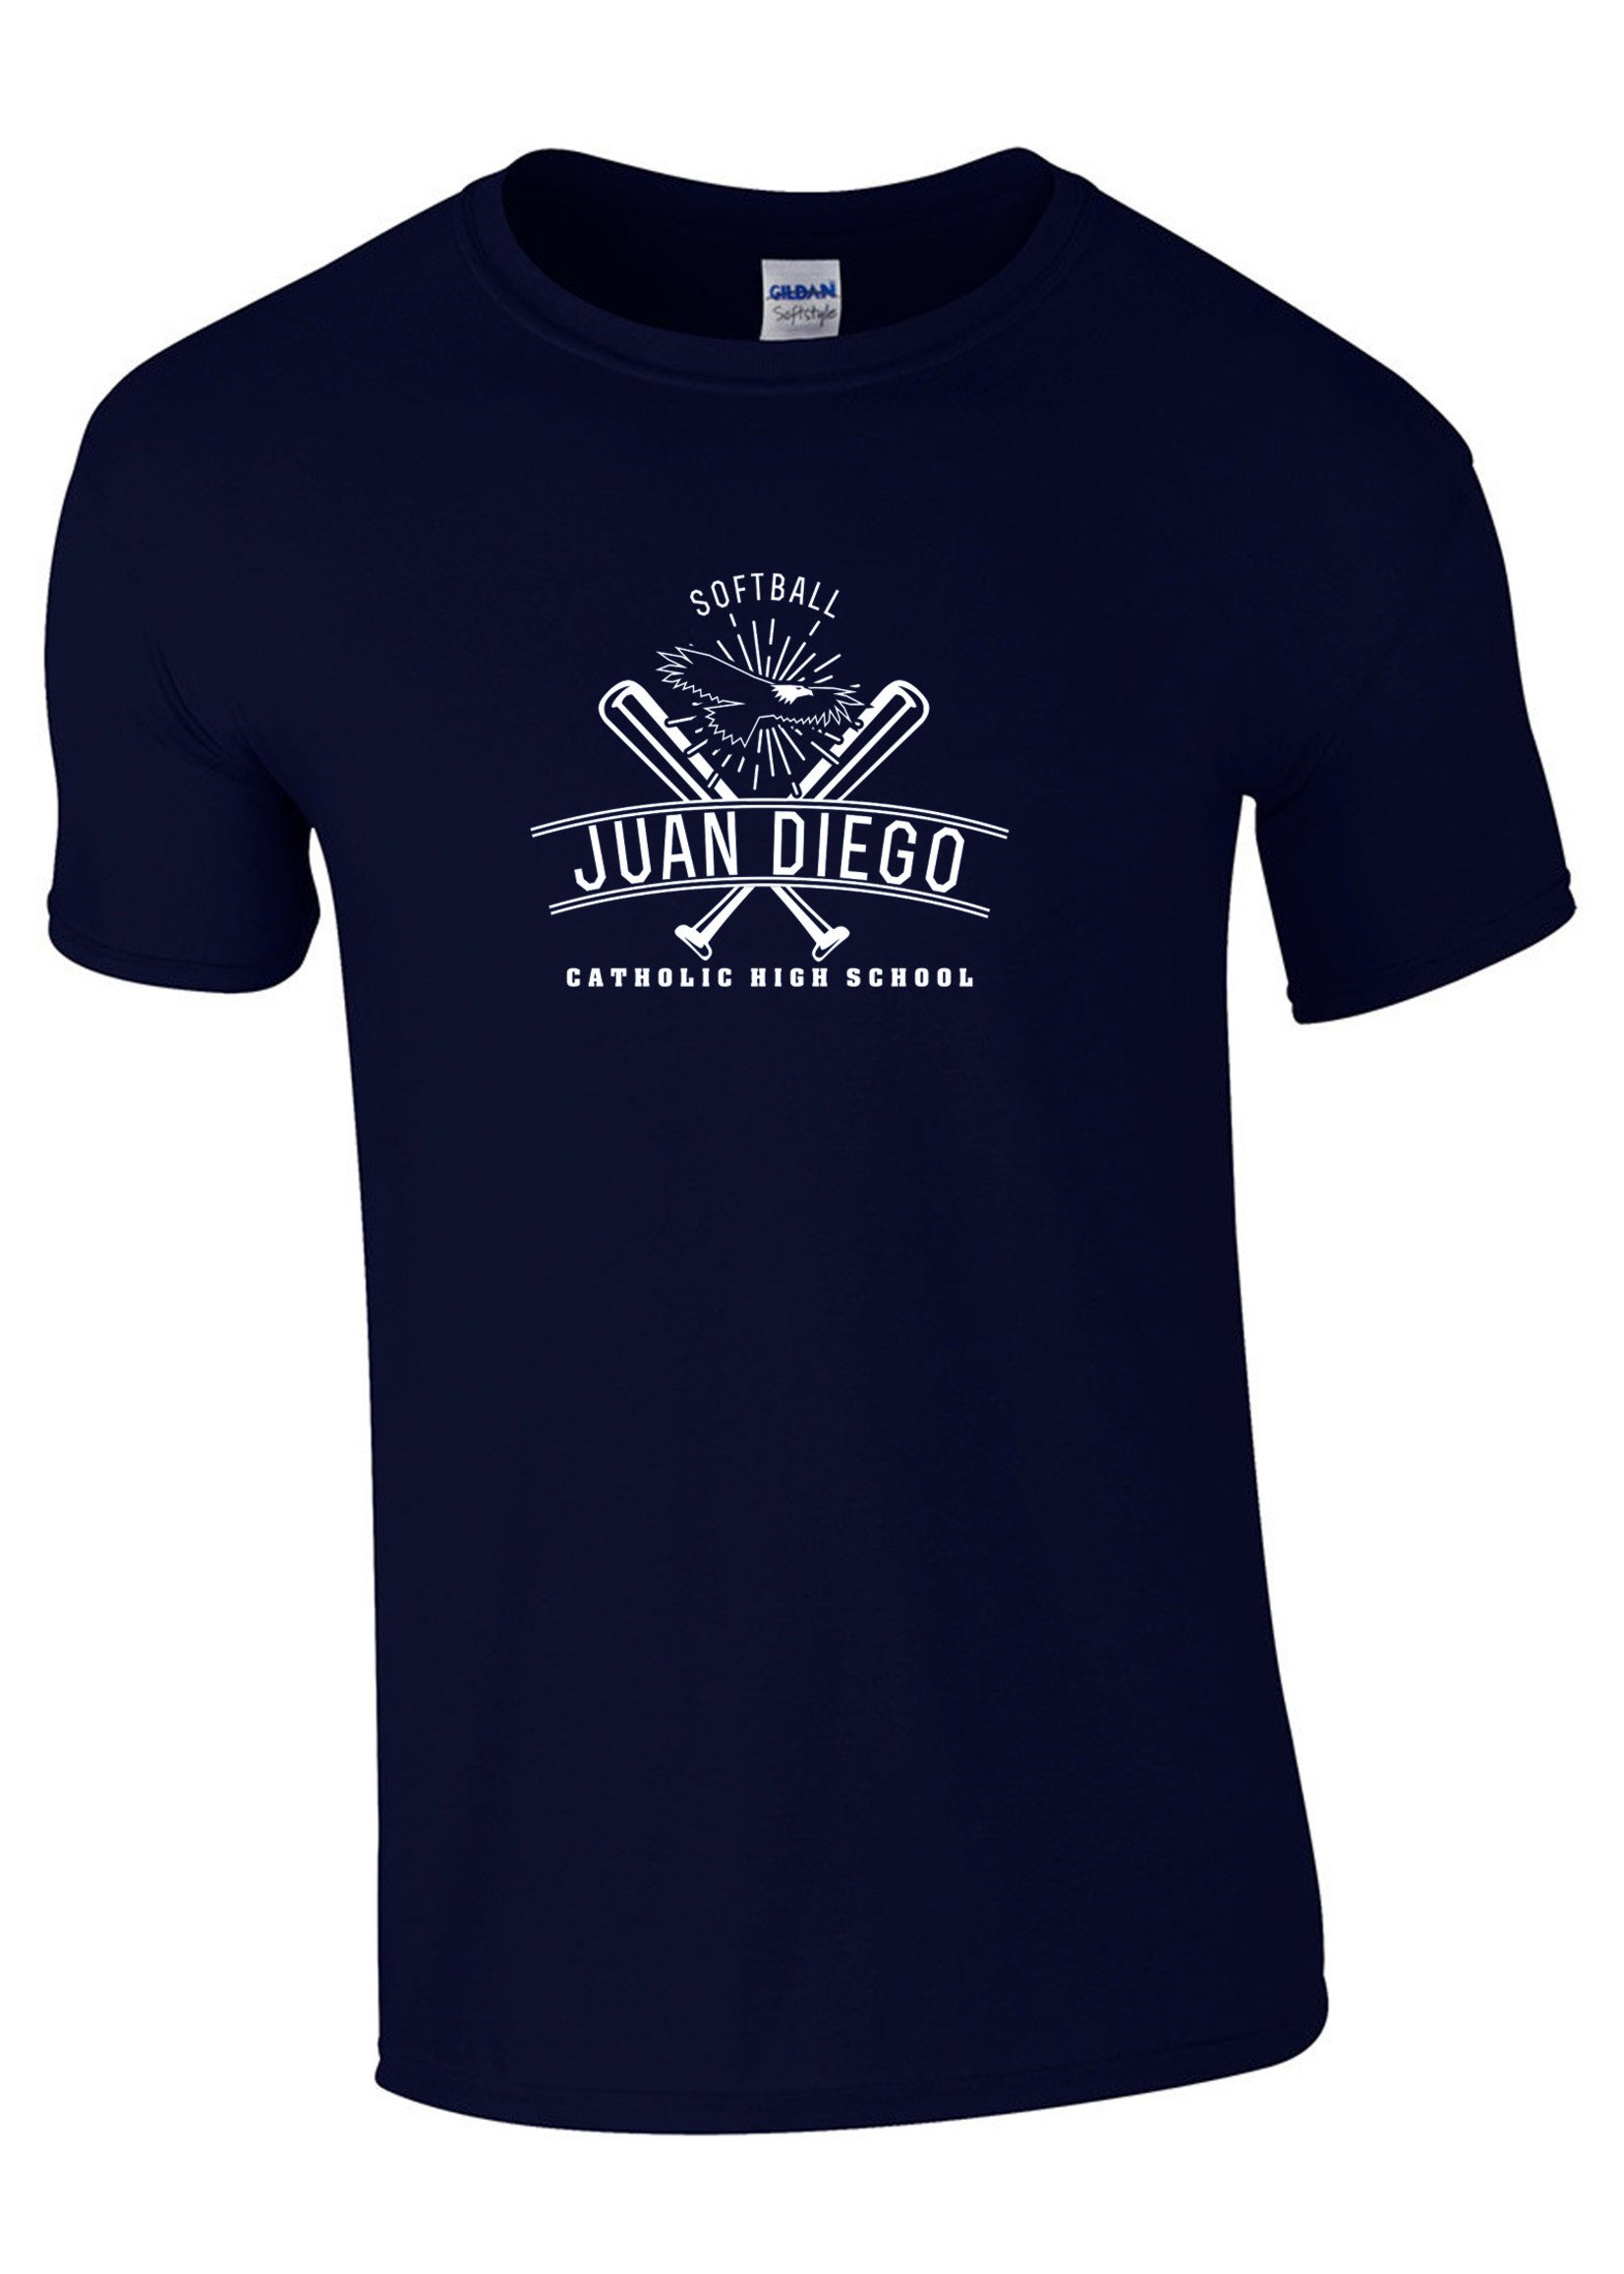 NON-UNIFORM JD Softball Spirit T-Shirt, legacy bat design